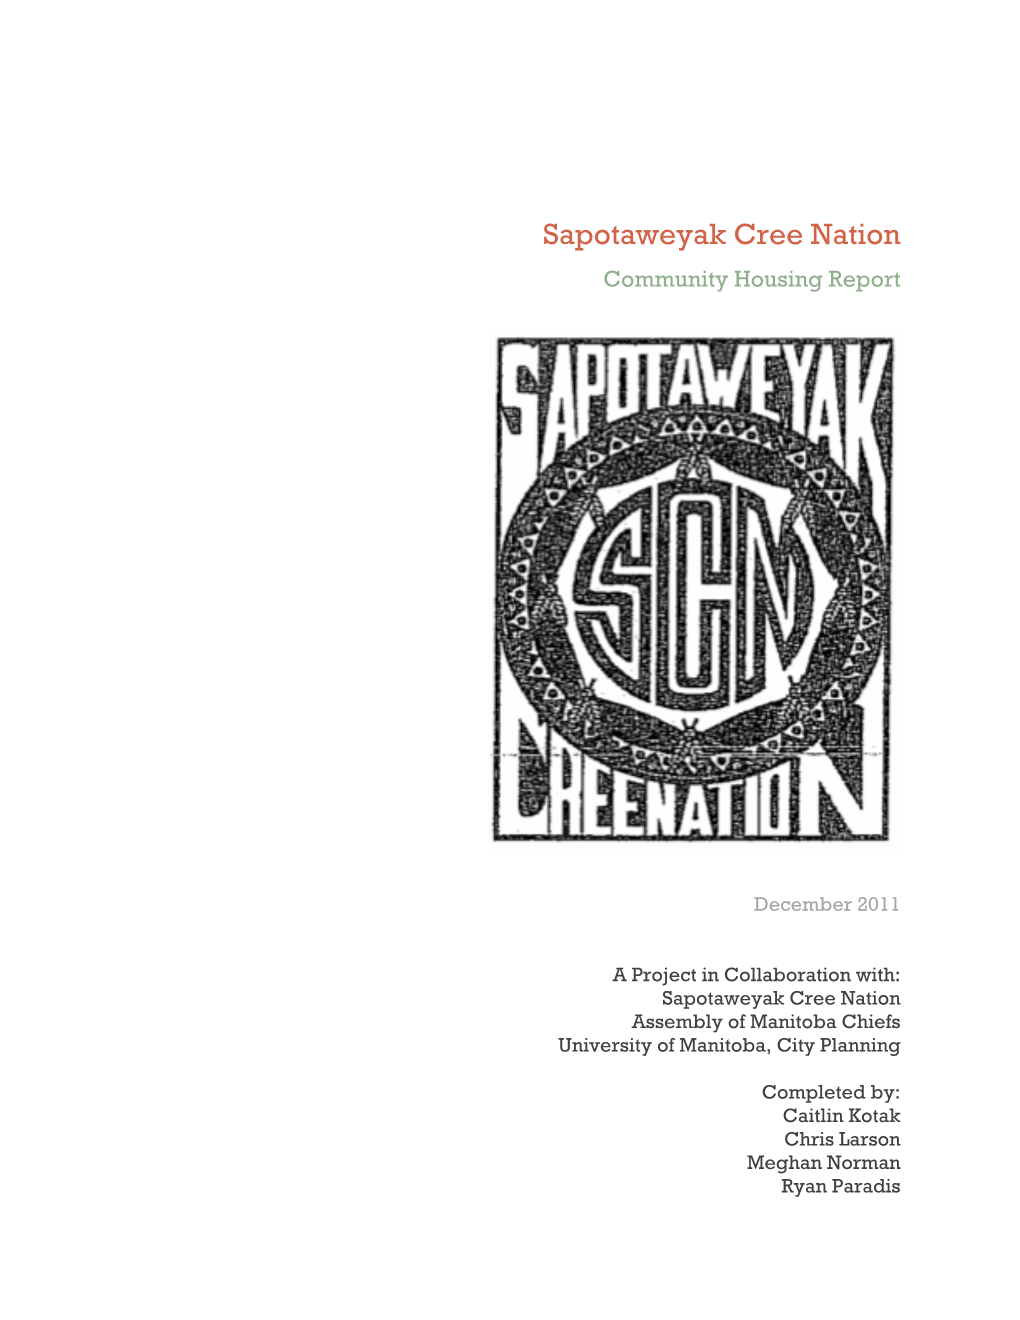 Sapotaweyak Cree Nation Community Housing Report